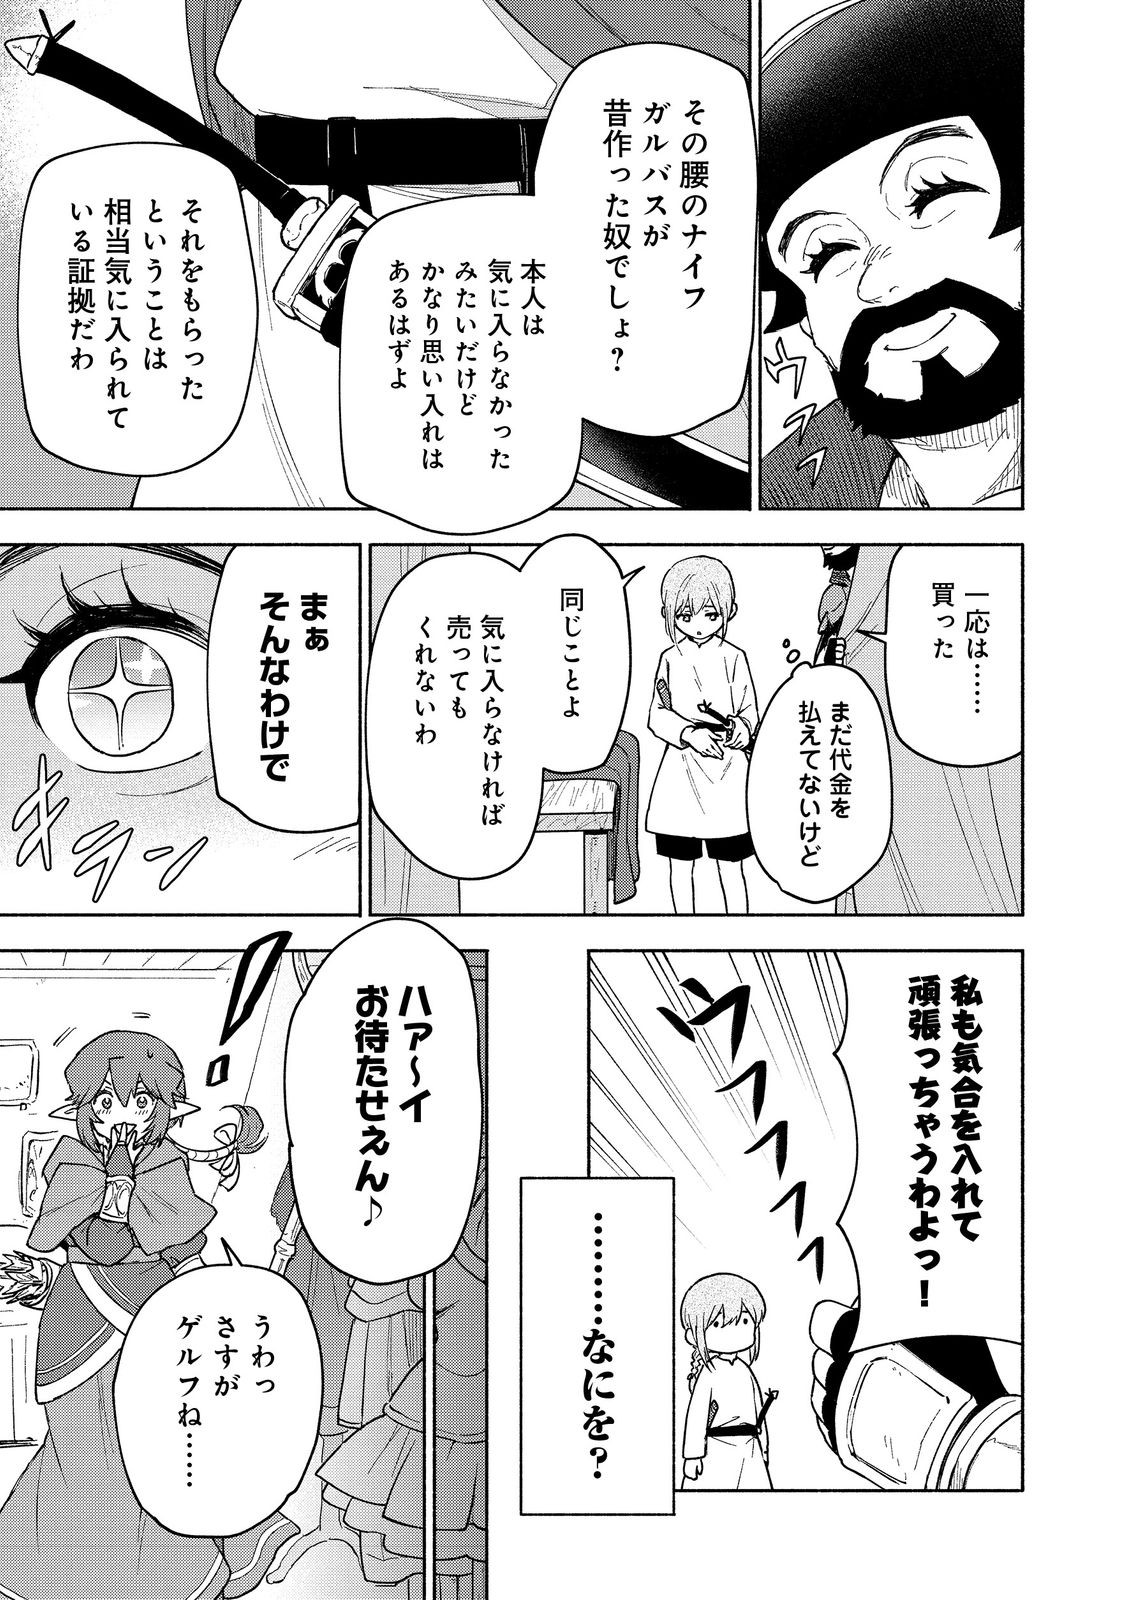 Otome Game no Heroine de Saikyou Survival - Chapter 22 - Page 19